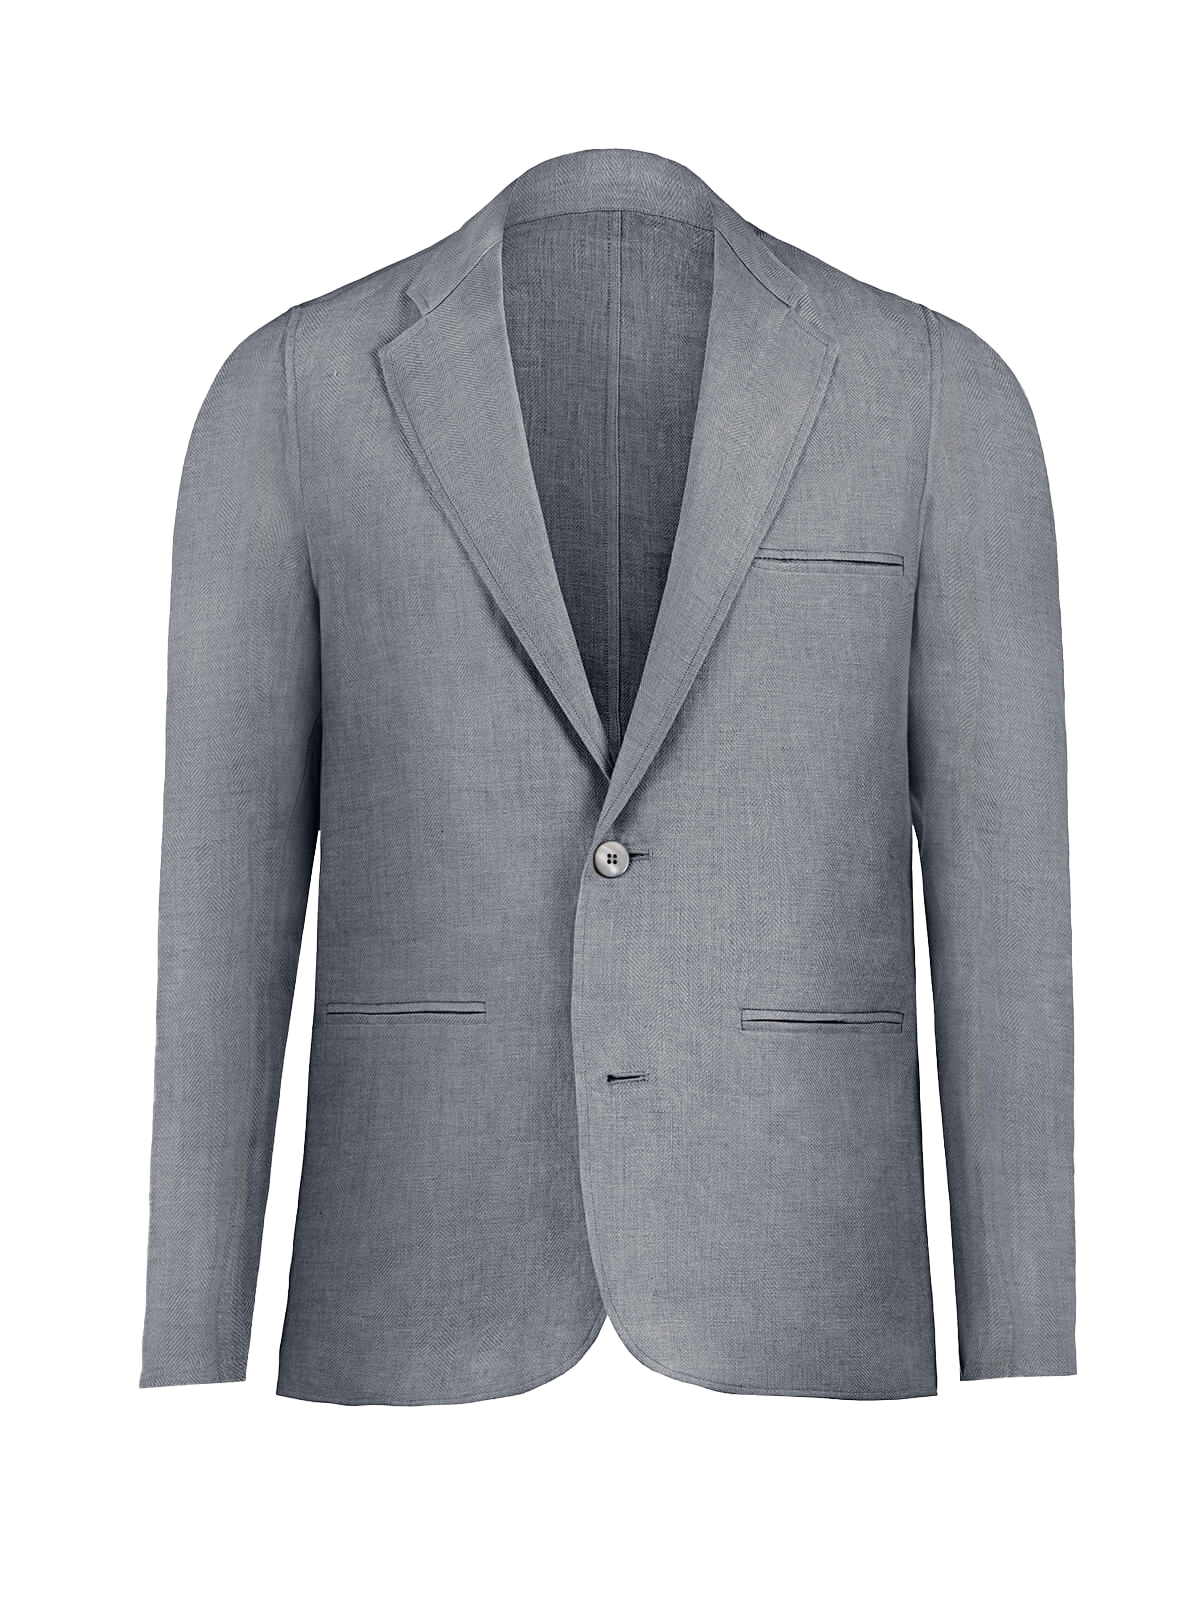 Giacca Sud Man 100% Capri dark grey linen jacket front